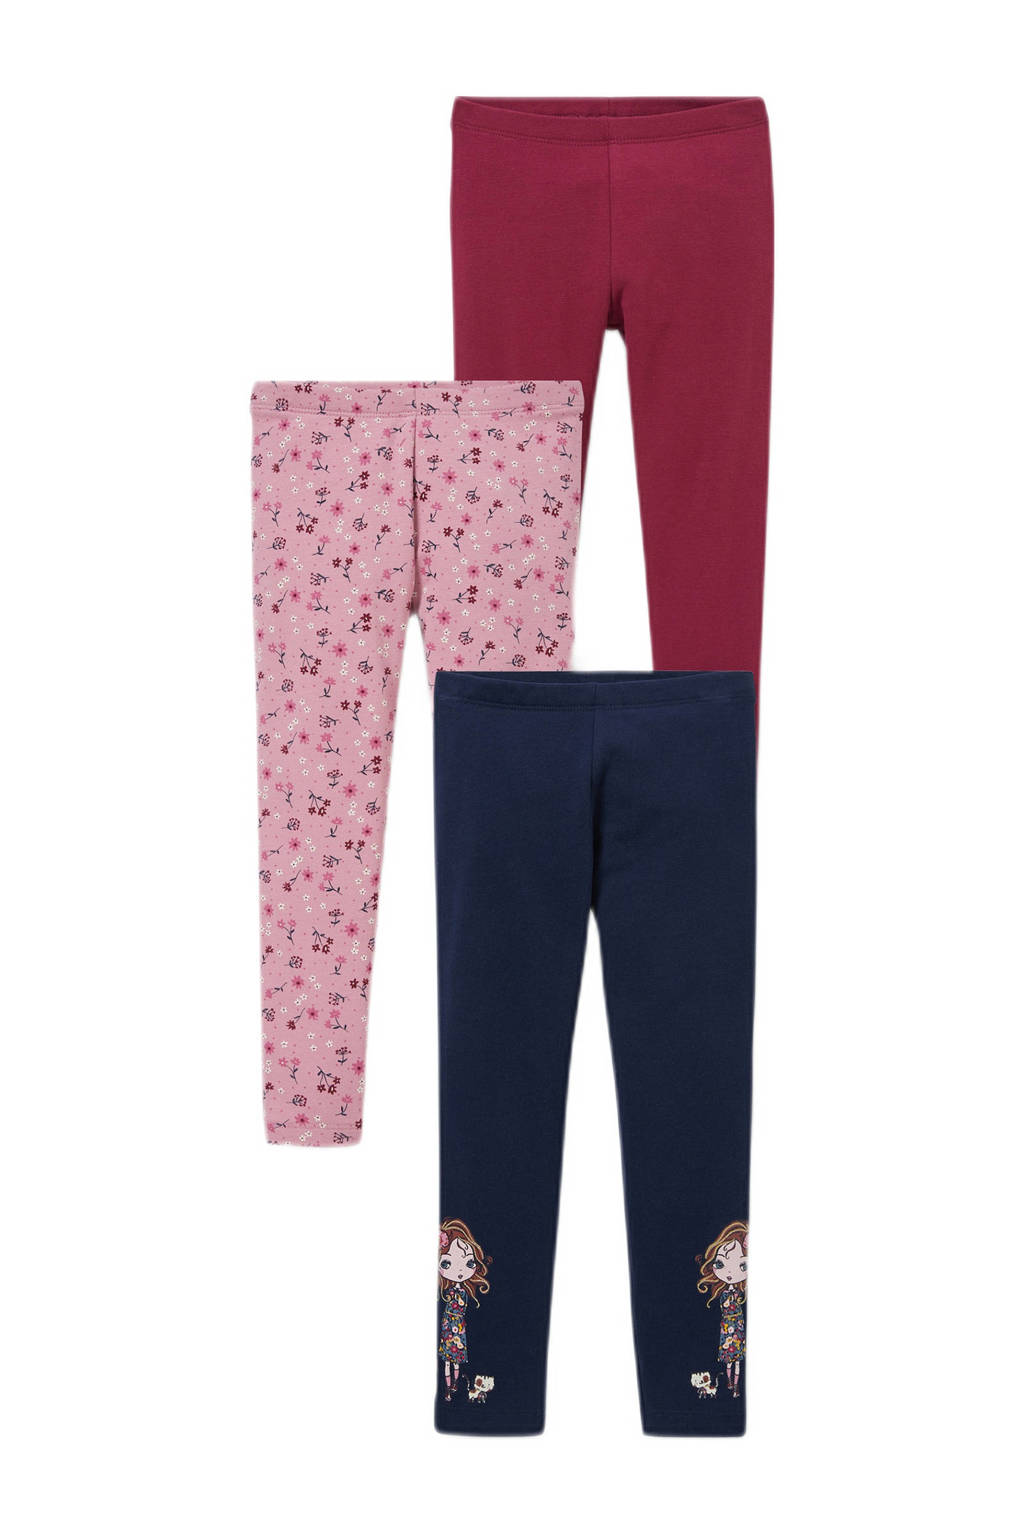 intern Muf rem C&A thermo legging - set van 3 roze/rood/donkerblauw | wehkamp